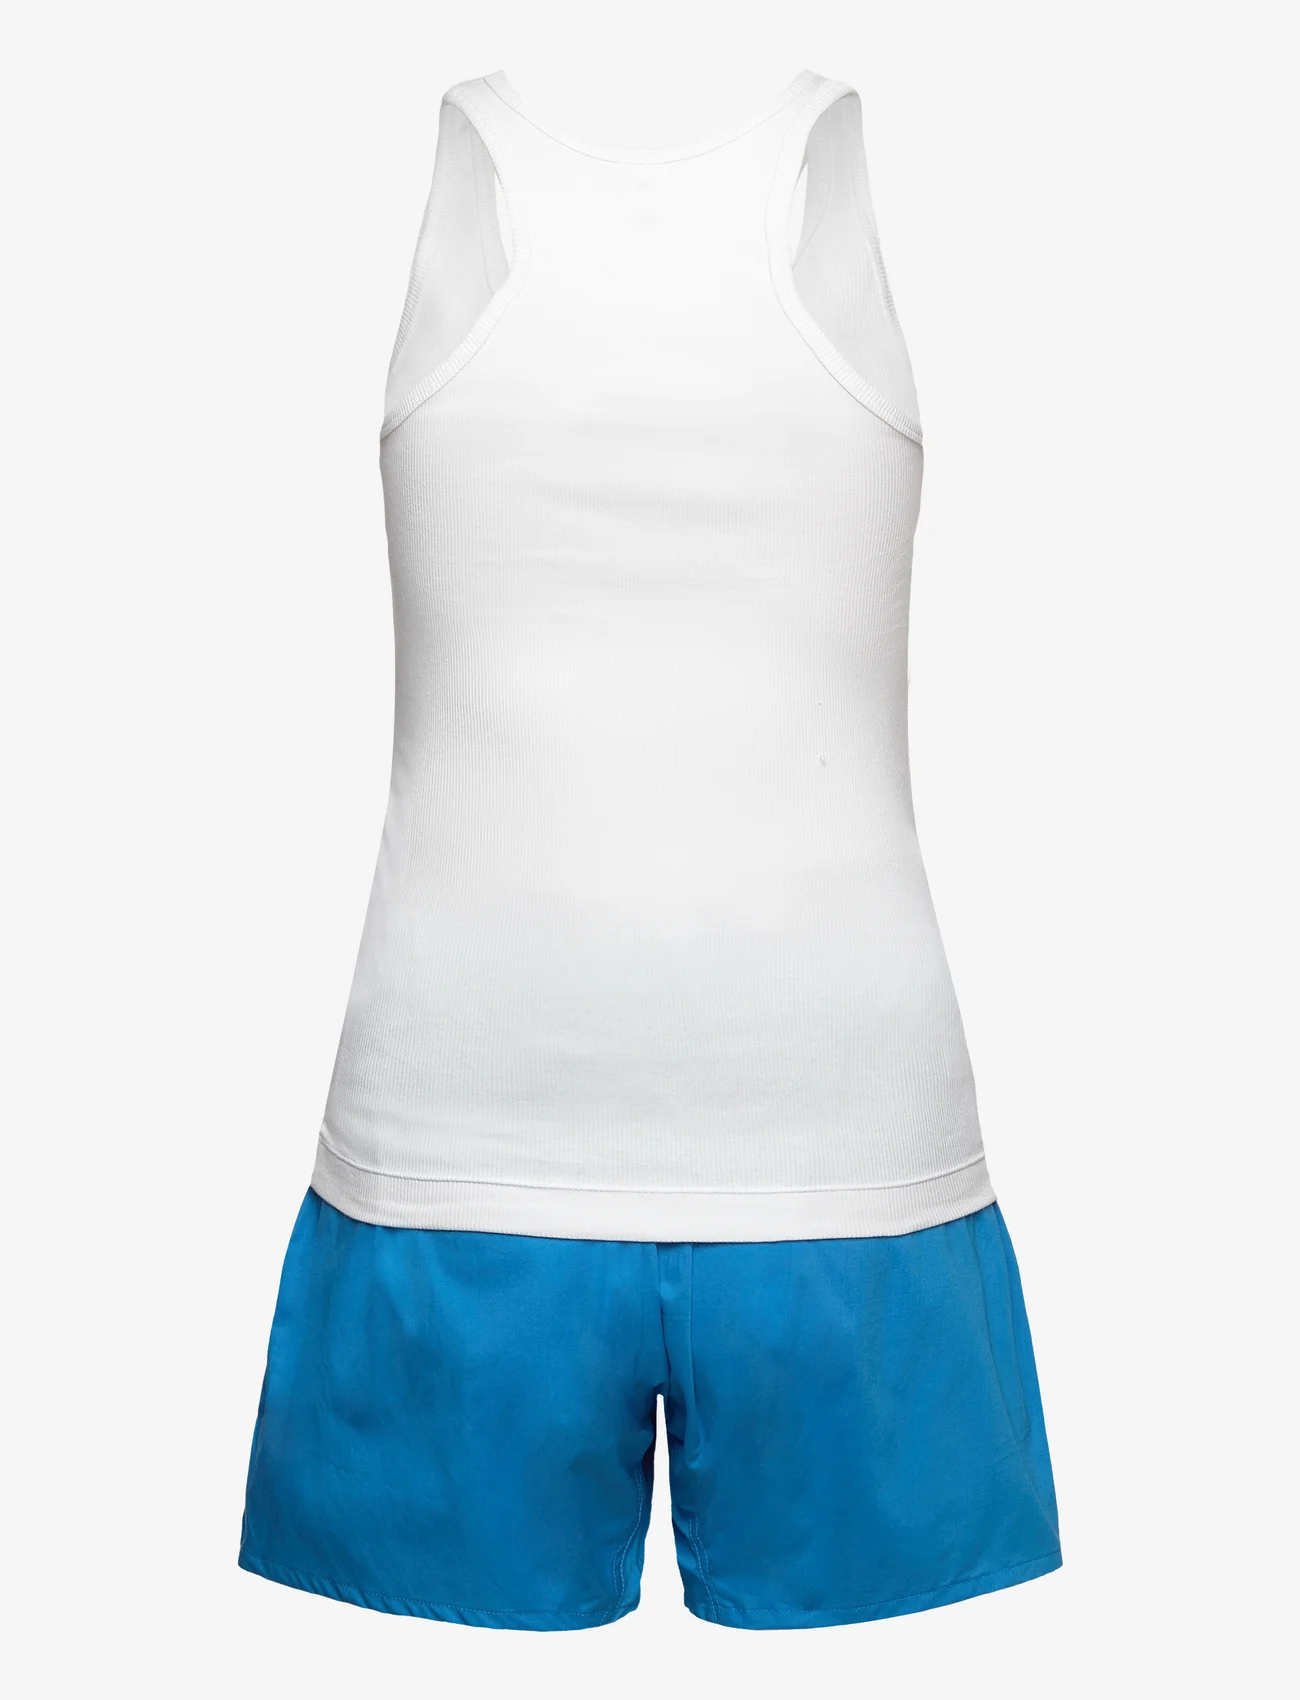 Calvin Klein - PJ IN A BAG - syntymäpäivälahjat - white top/brilliant blue bottom/bag - 1